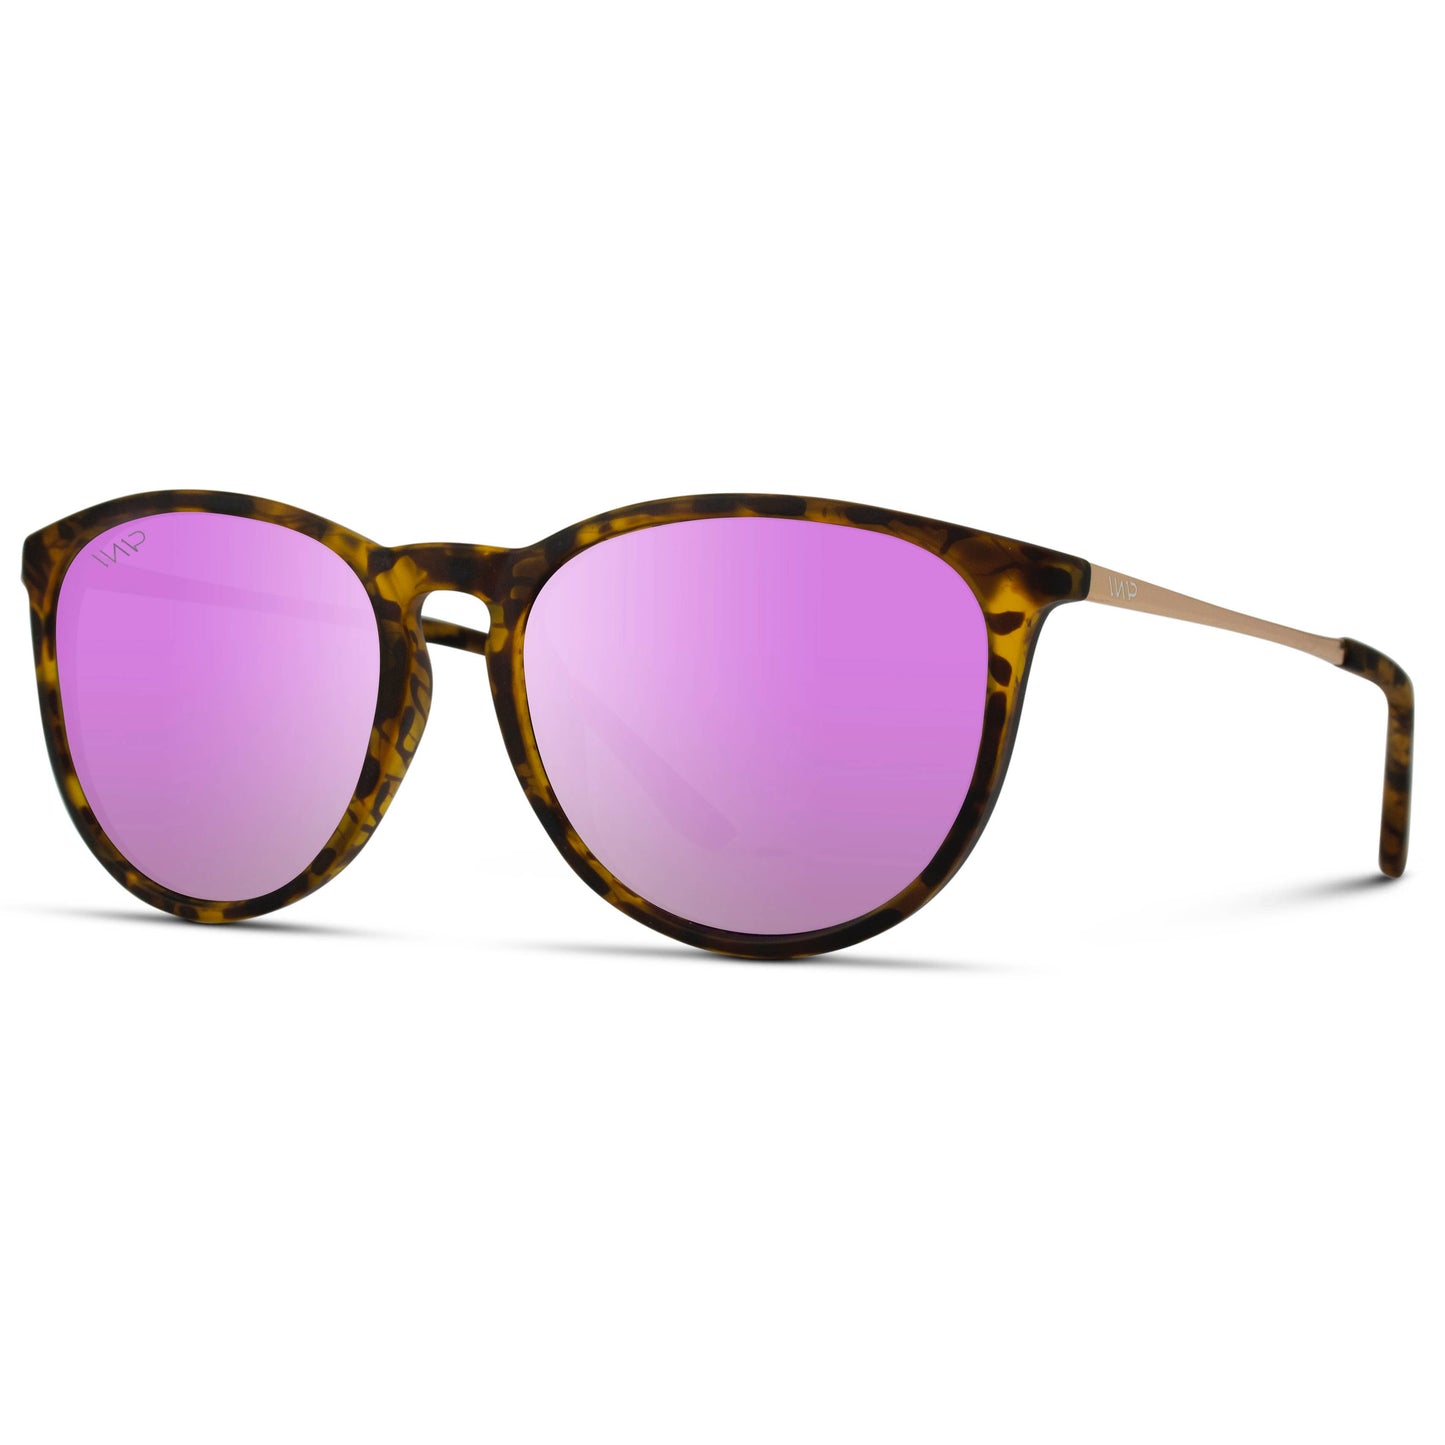 Drew Round Polarized Metal Temple Sunglasses: Tortoise Frame/Brown Lens